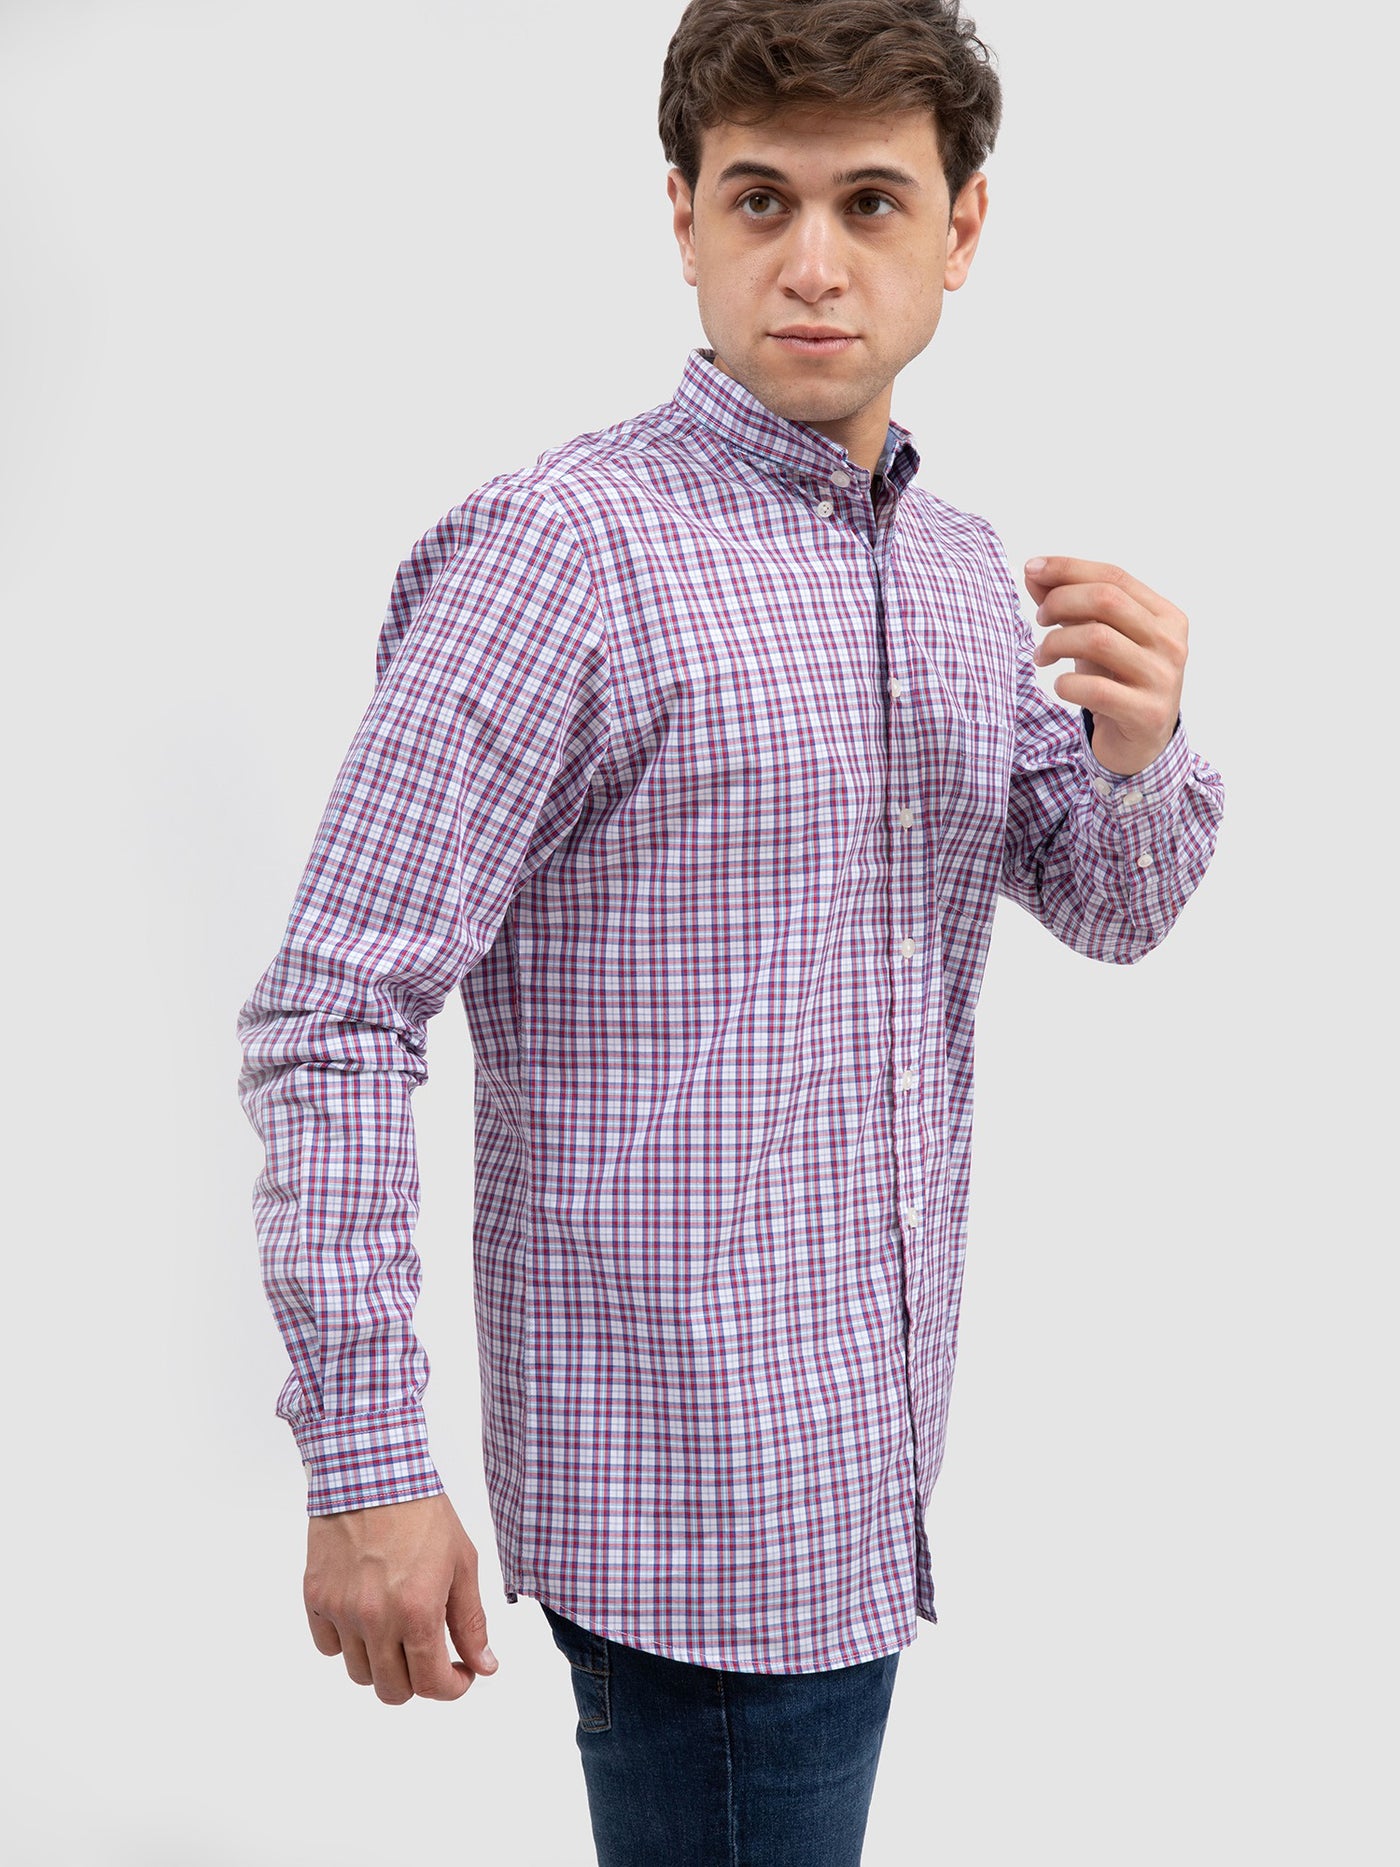 Premoda Mens Checkered Shirt